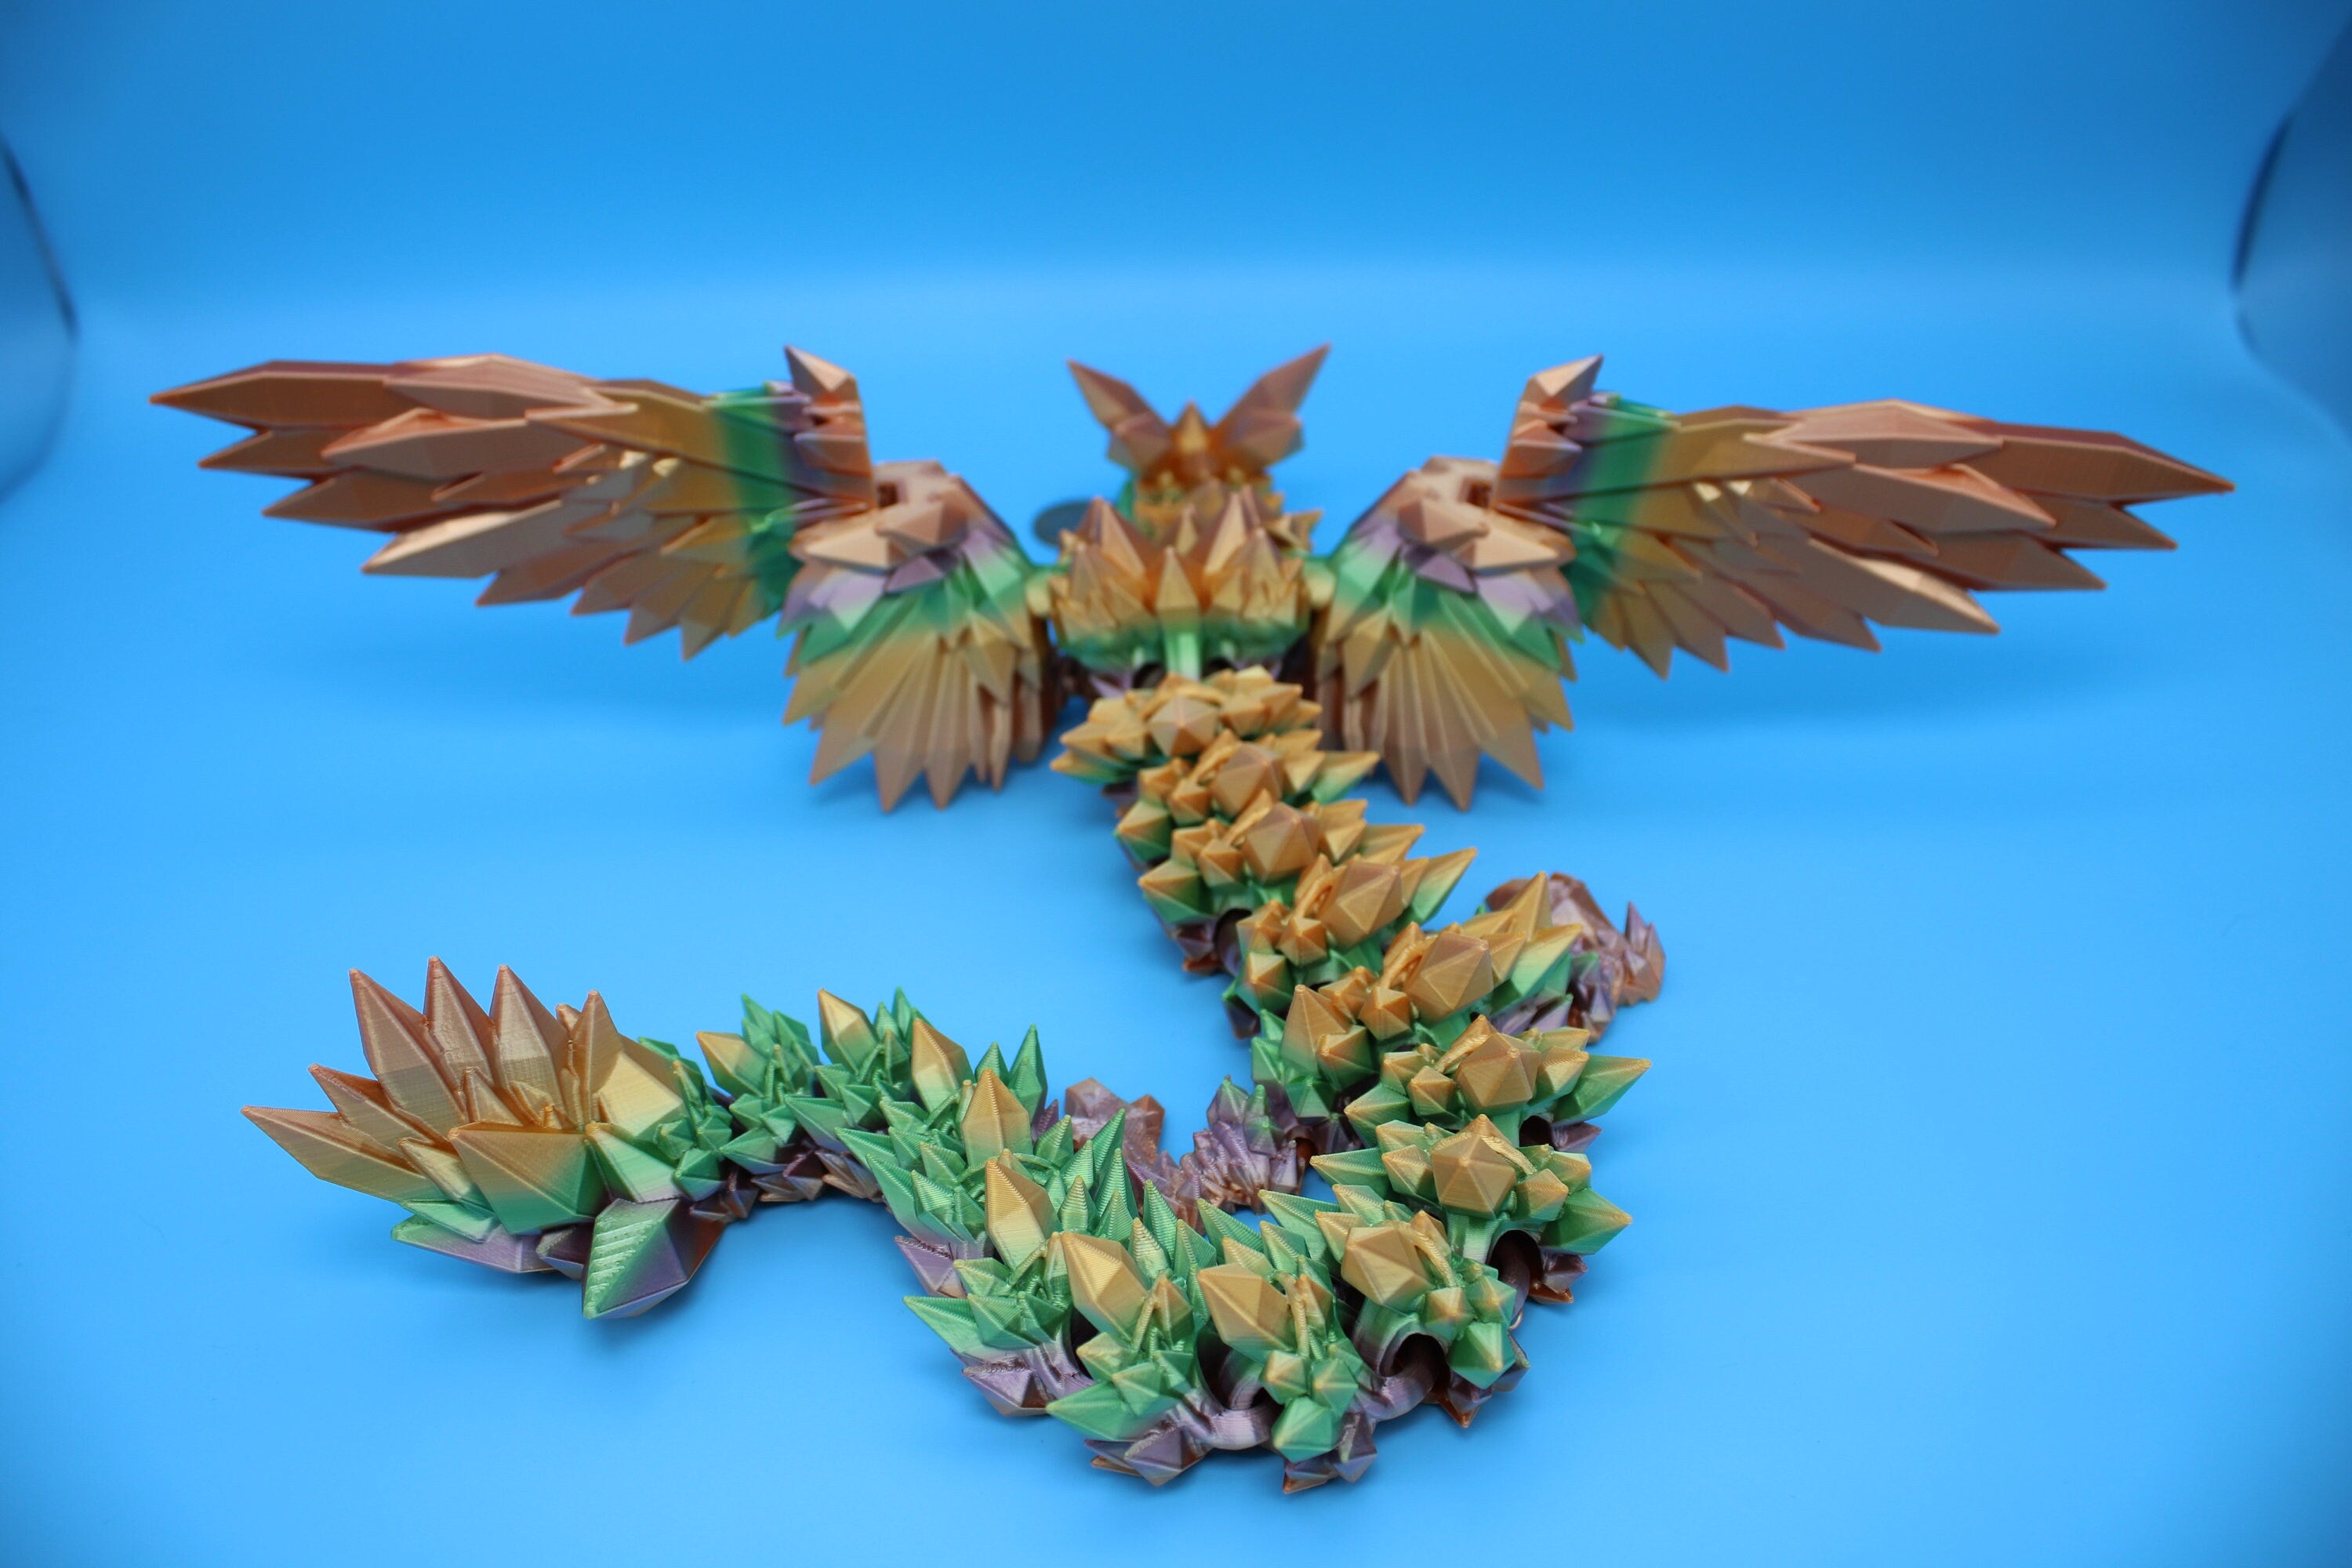 Crystal Wing Dragon | Rainbow | Crystal Wing Dragon | 3D printed | Articulating Dragon | Fidget Toy | Flexi Toy | 18 in